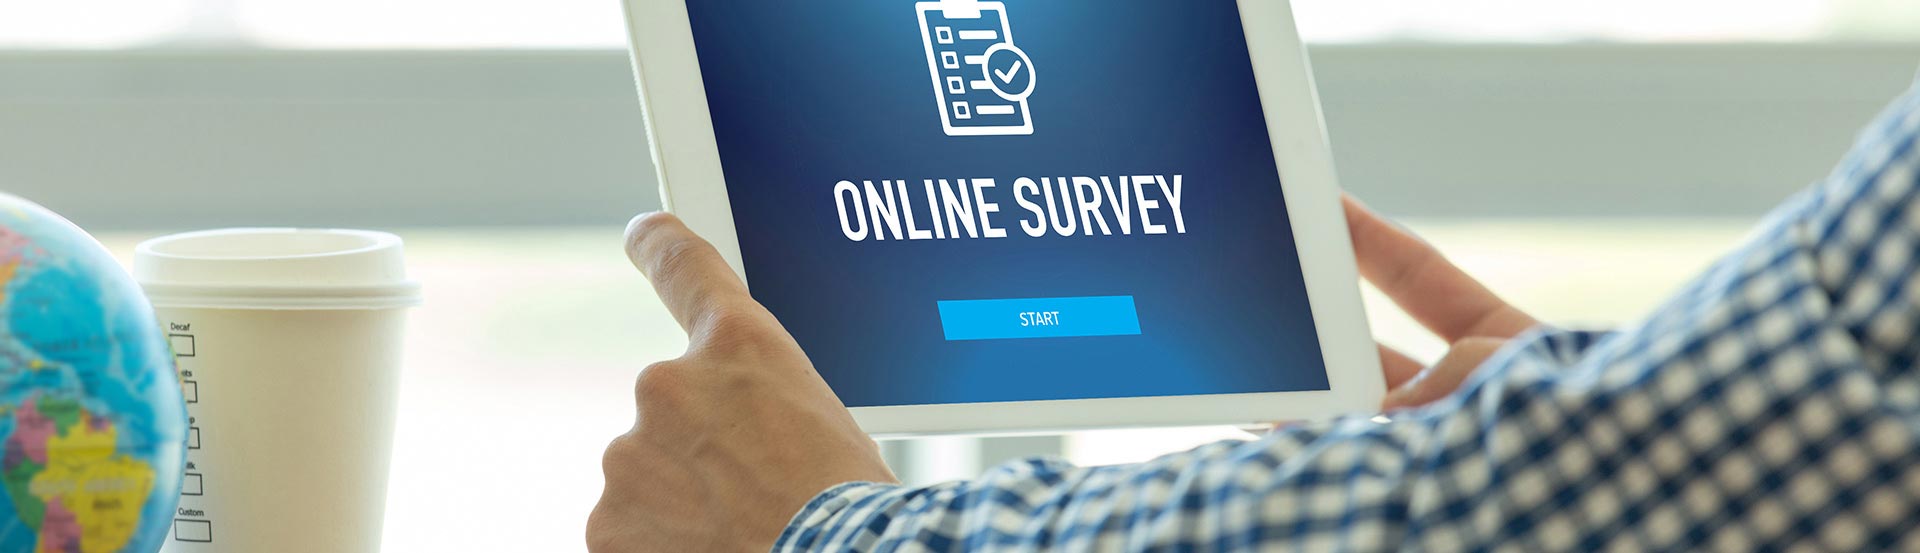 Online survey results